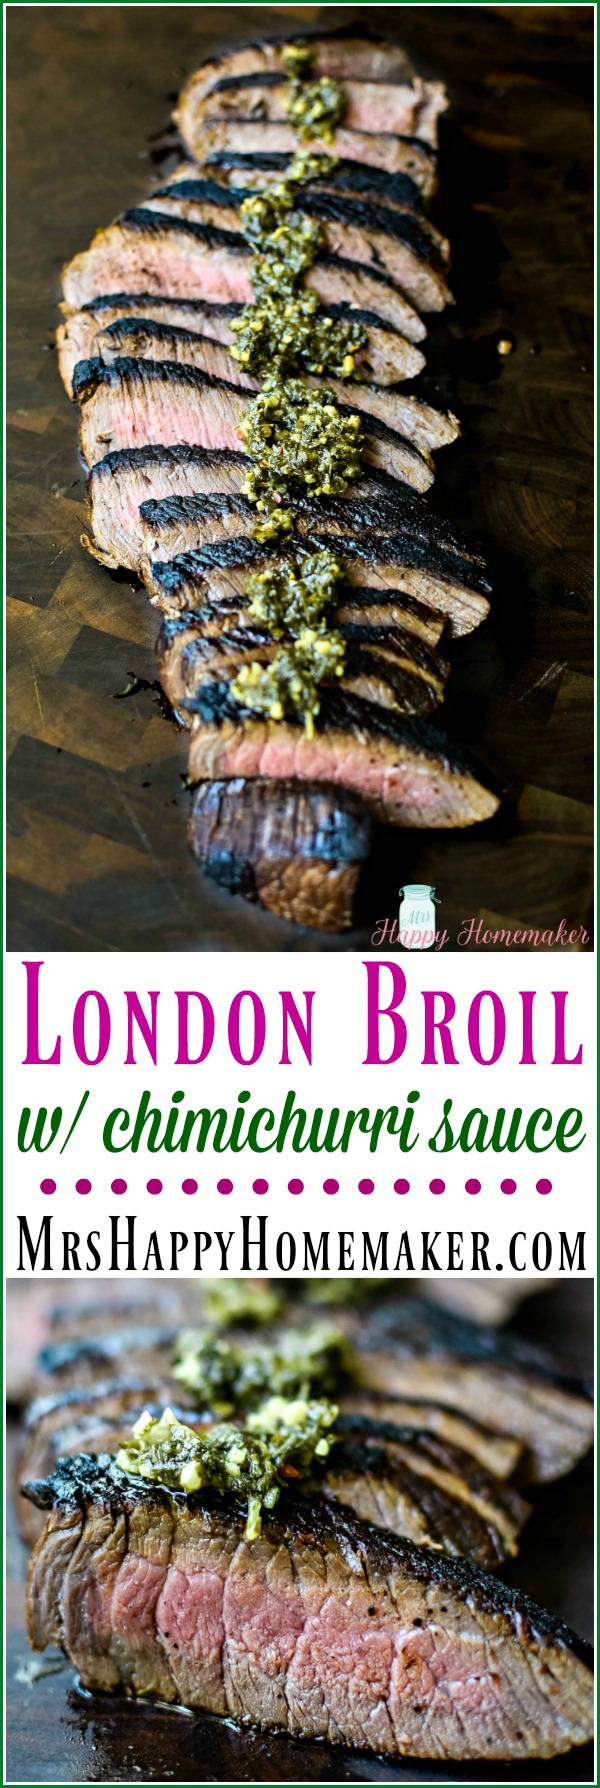 London broil with chimichurri sauce | MrsHappyHomemaker.com